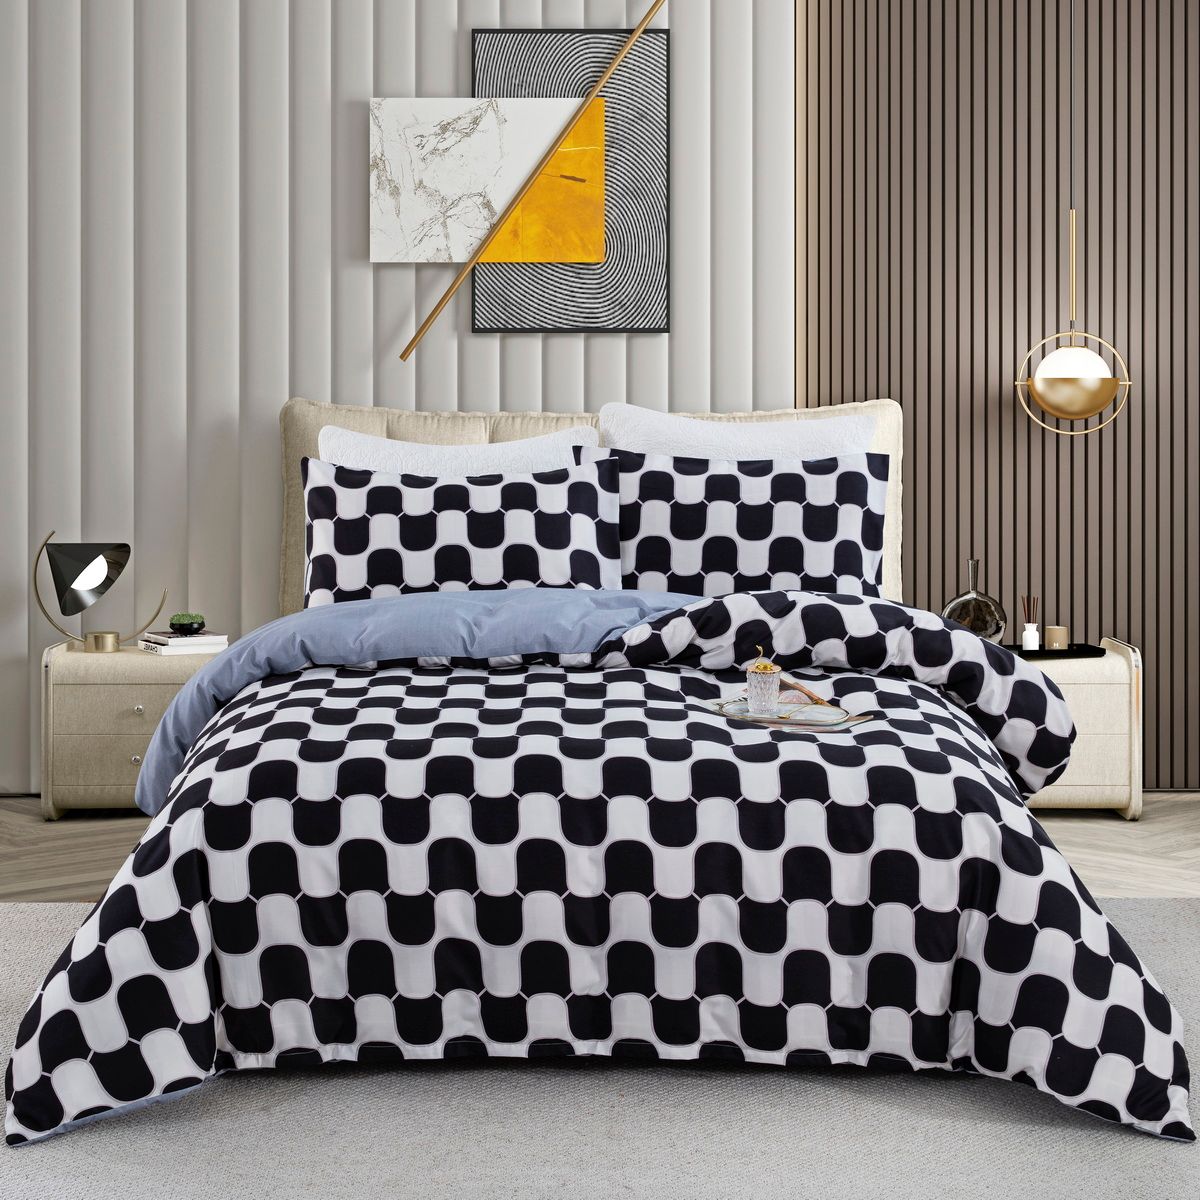 2/3pcs Modern and Minimalist Cartoon Geometric Pattern Bedding Set,Includes Duvet Cover and Pillowca